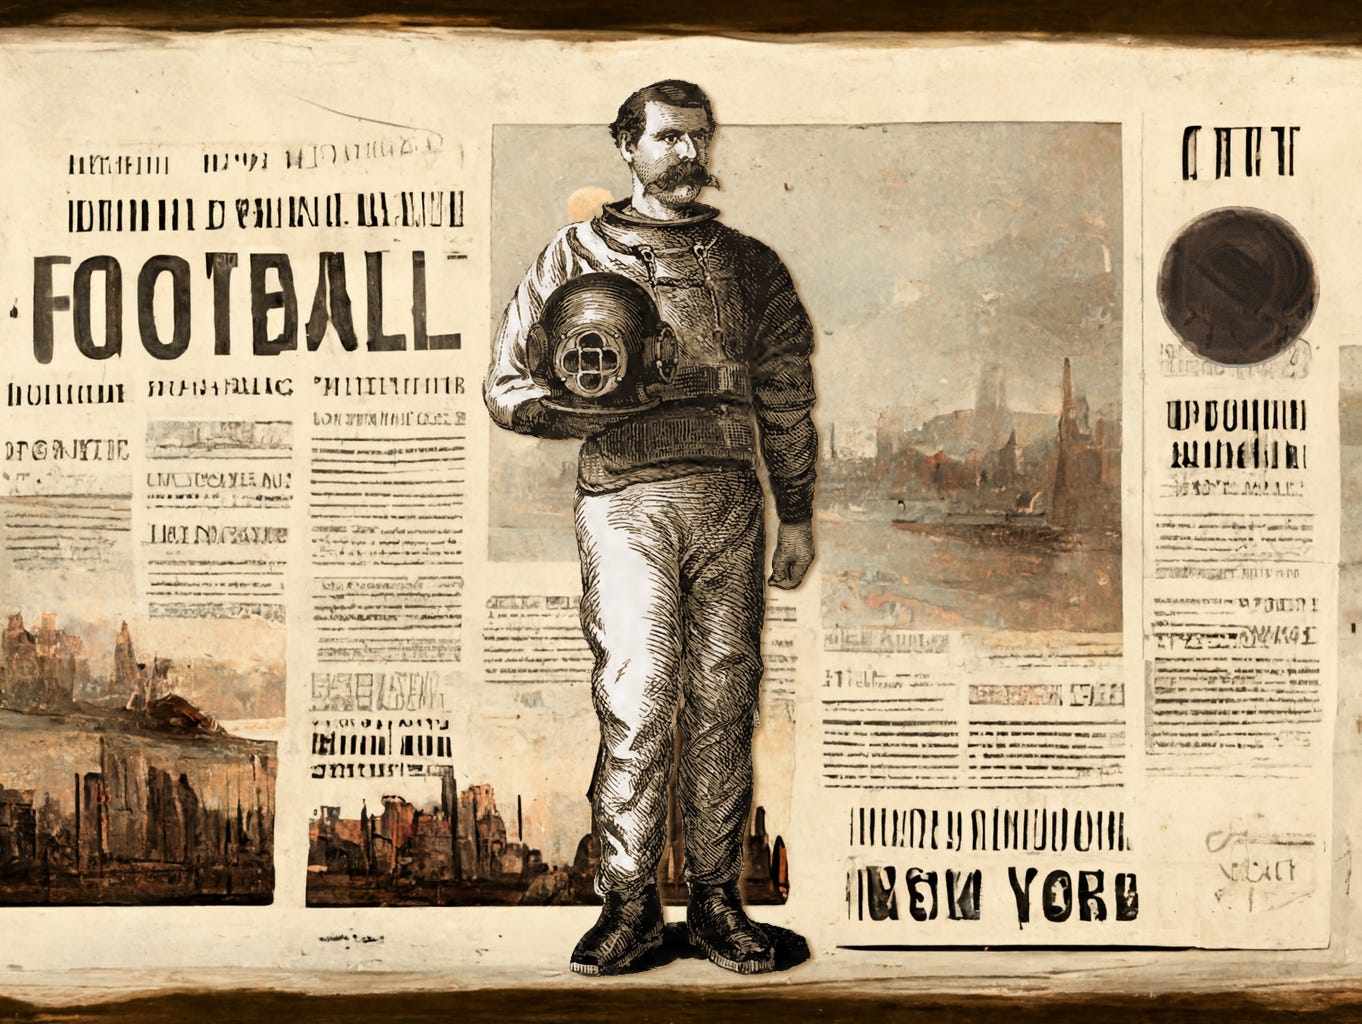 Arthur Pember: The Mermaid Hunter Who Invented Football